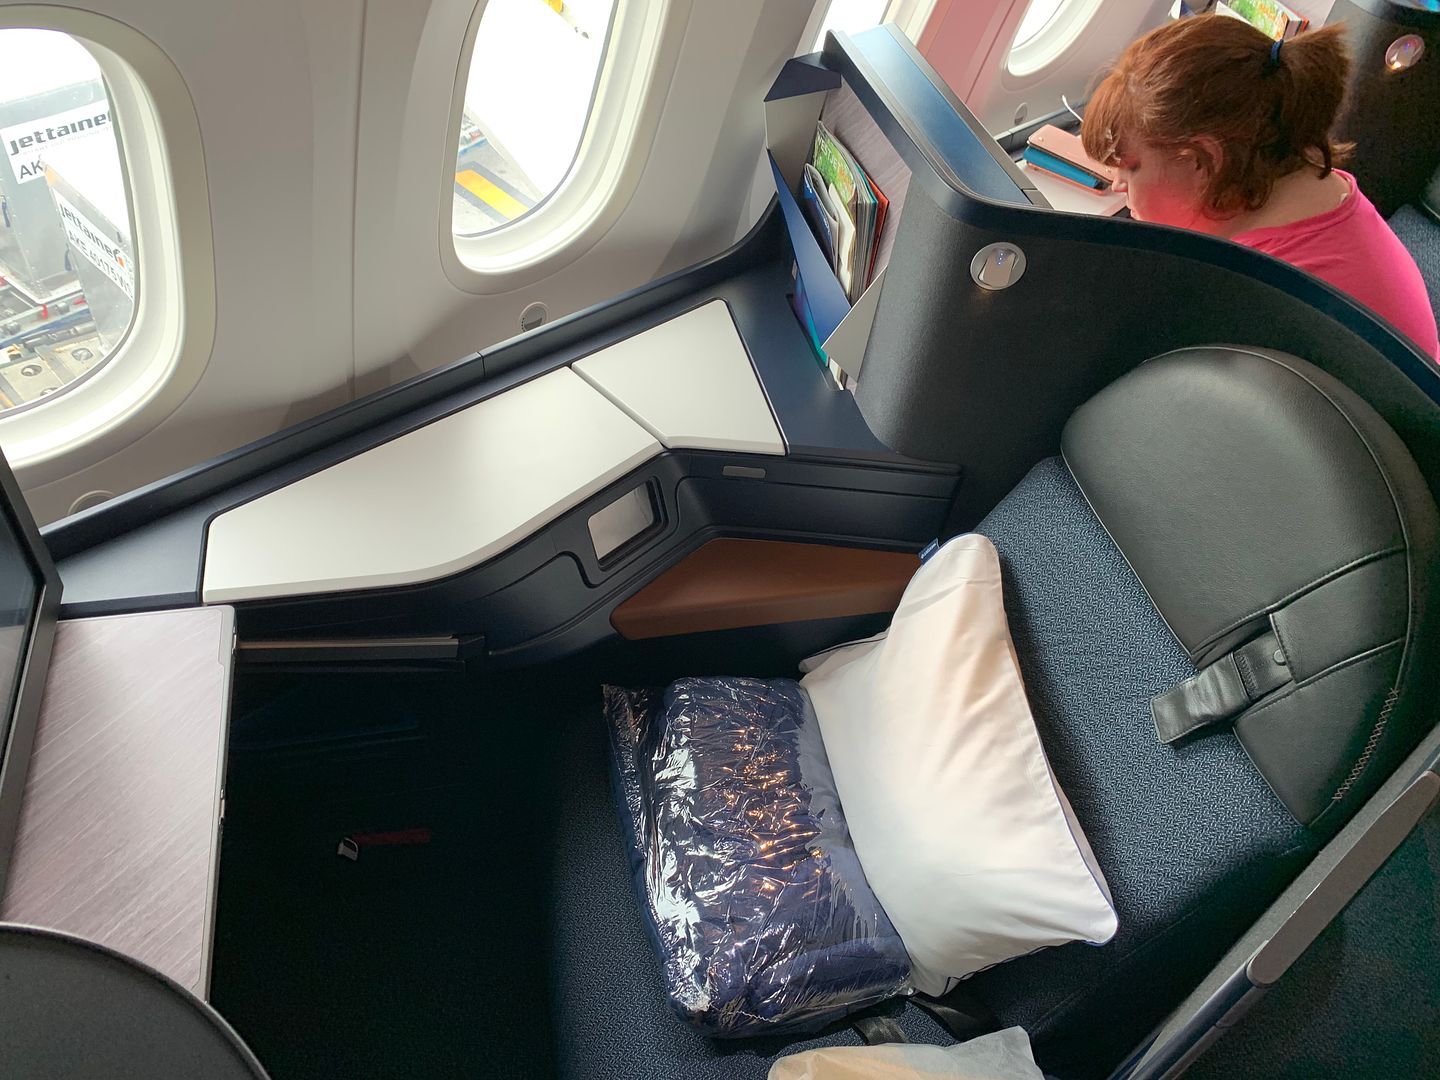 WestJet 787-9 business class is Air Canada's worst nightmare – SANspotter